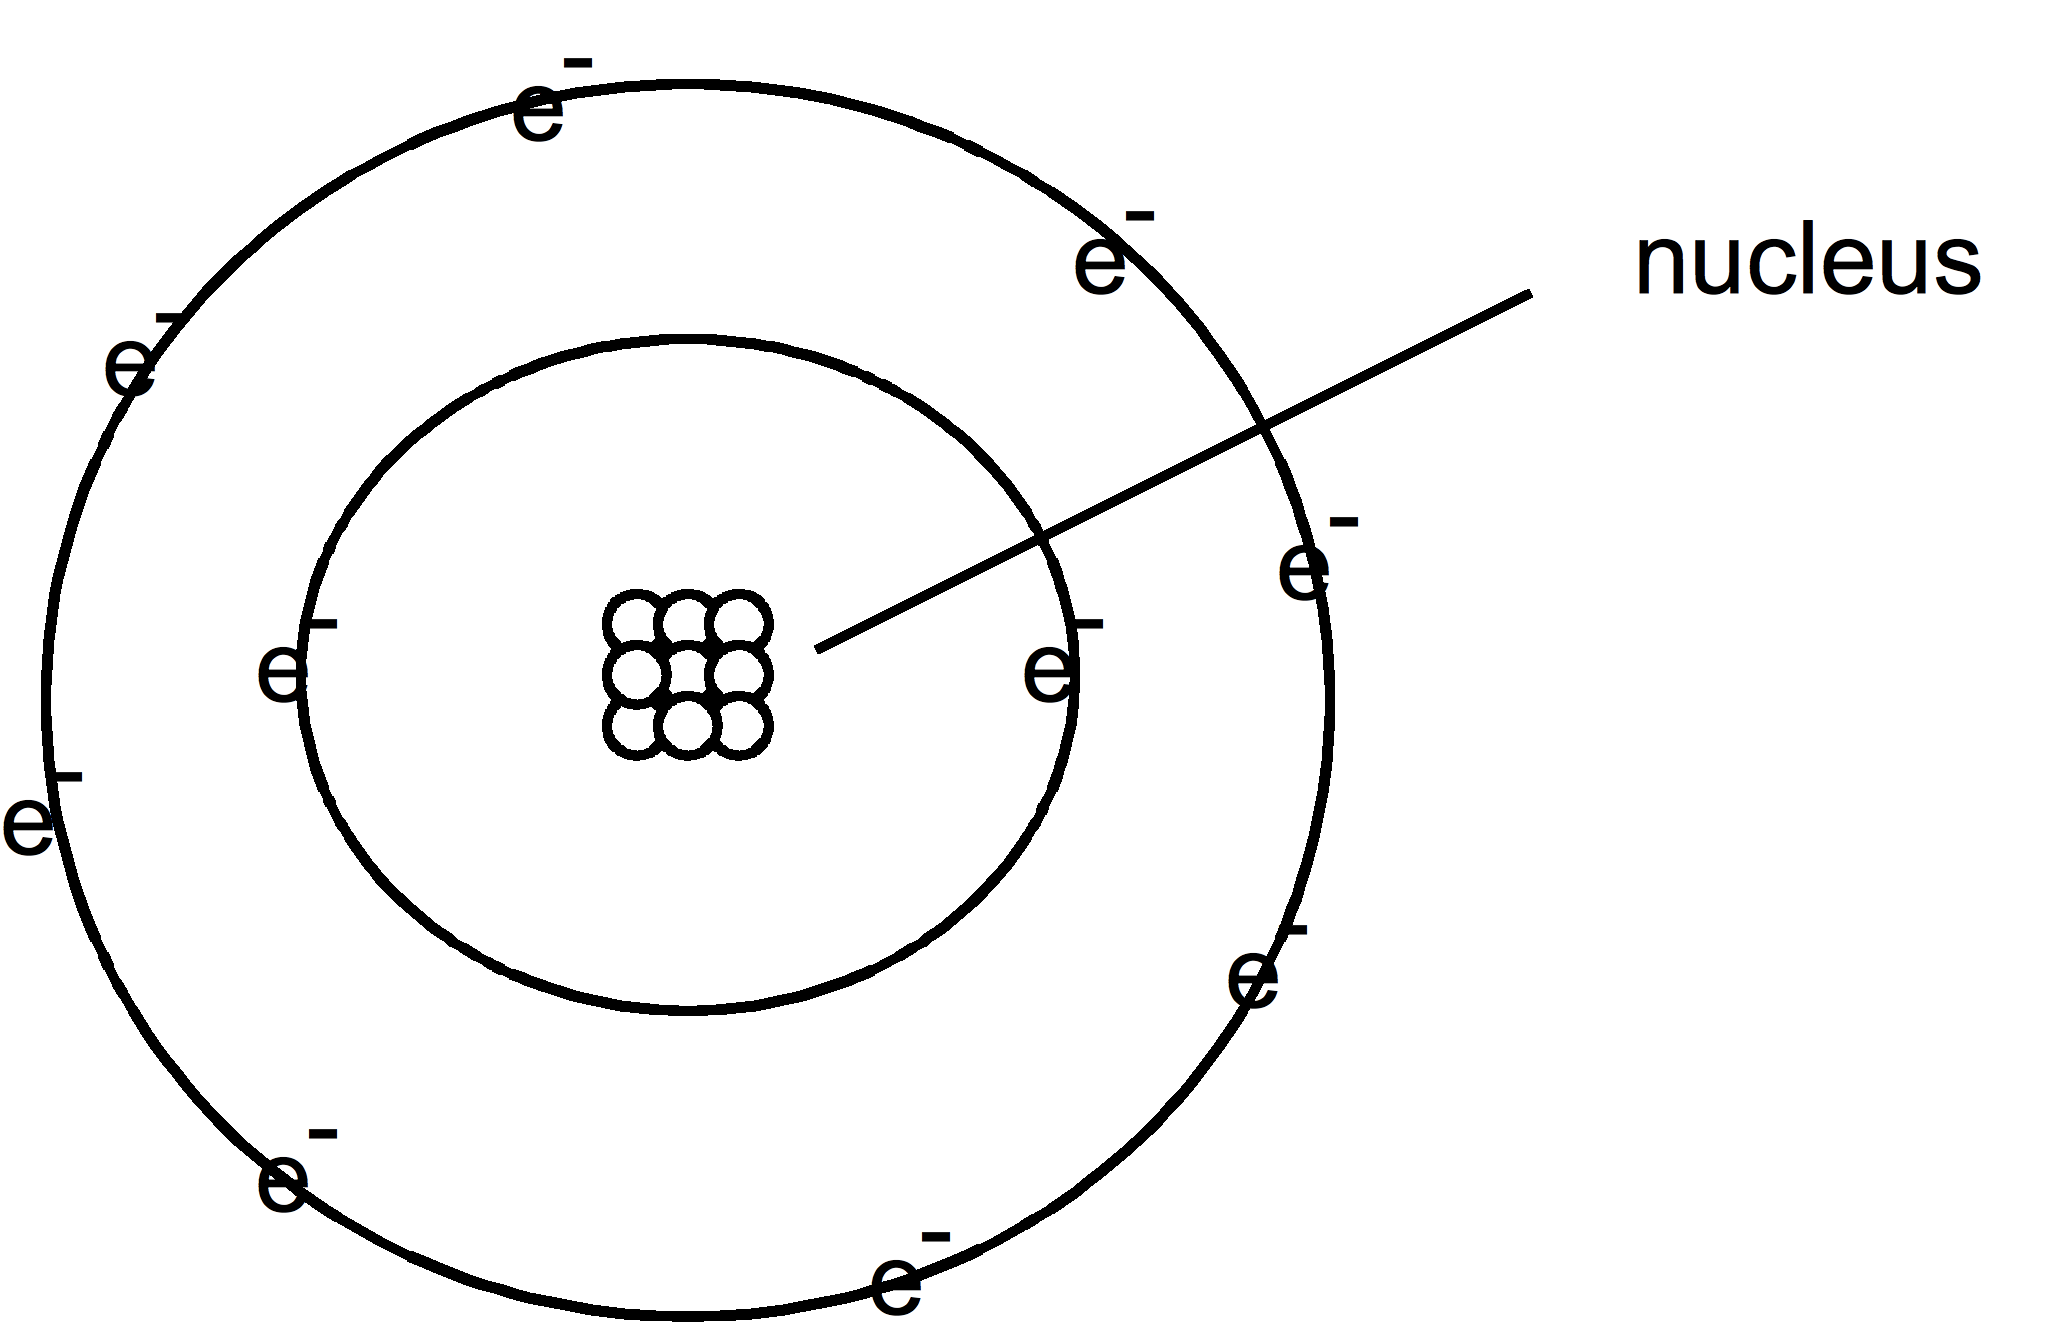 Bohr structure